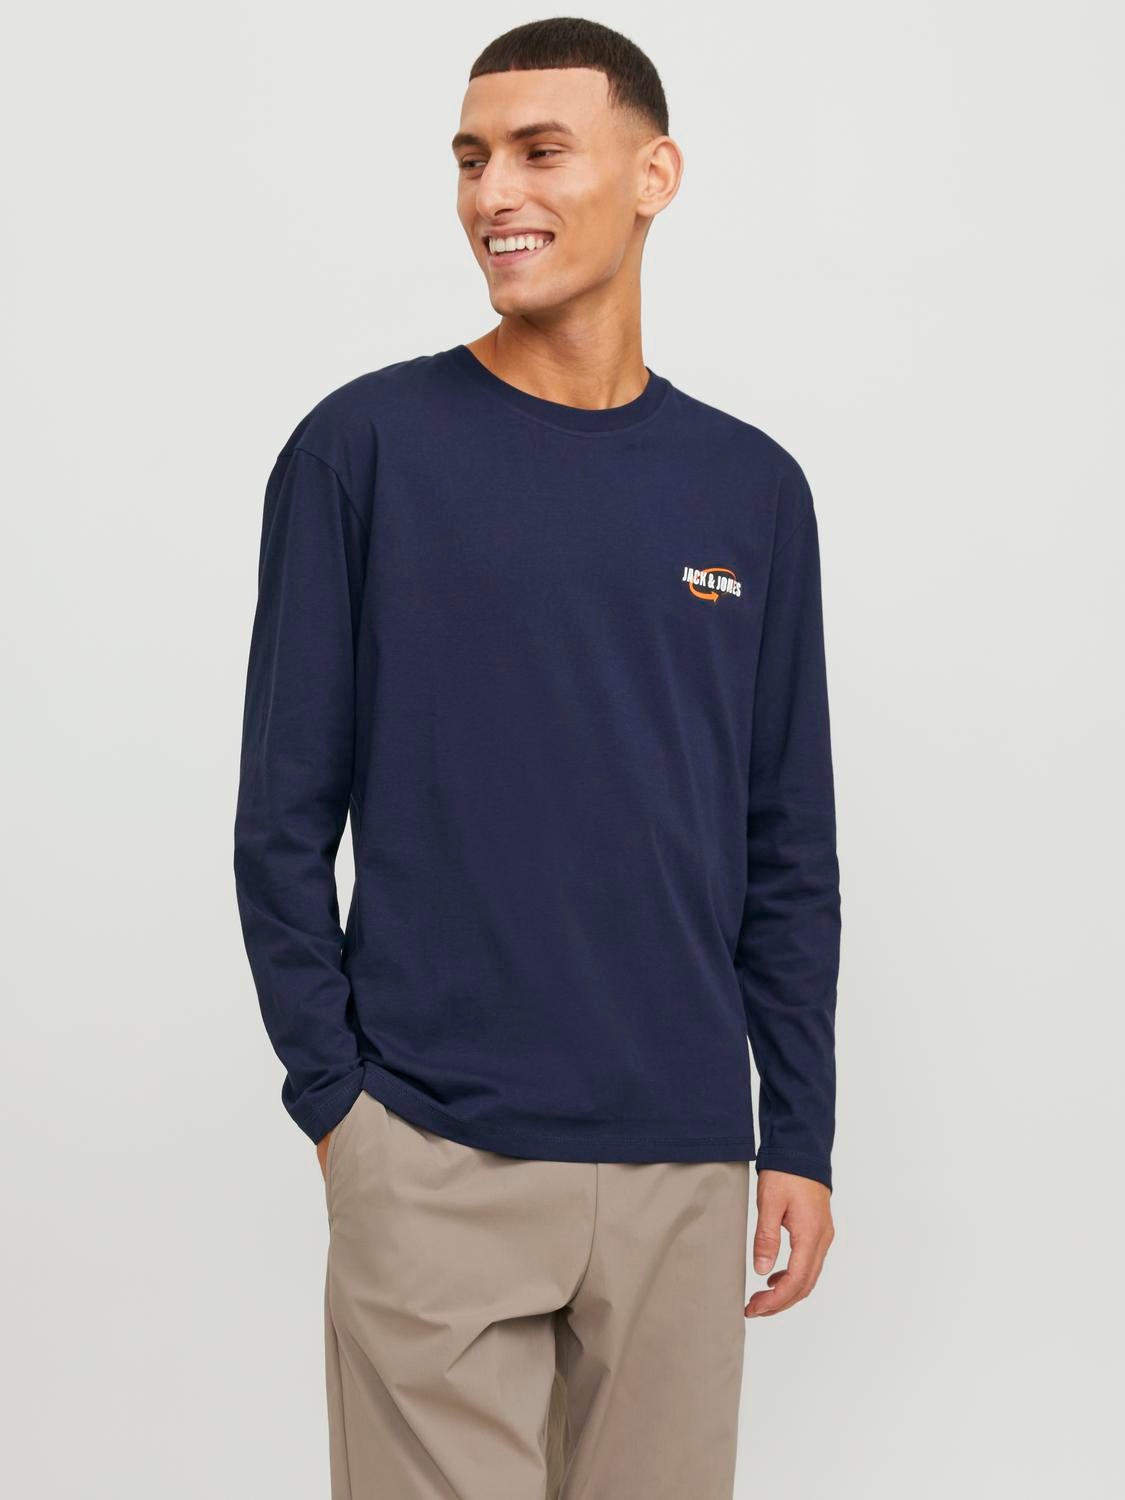 Jack & Jones Camiseta Estampado Cuello redondo -Navy Blazer - 12253809